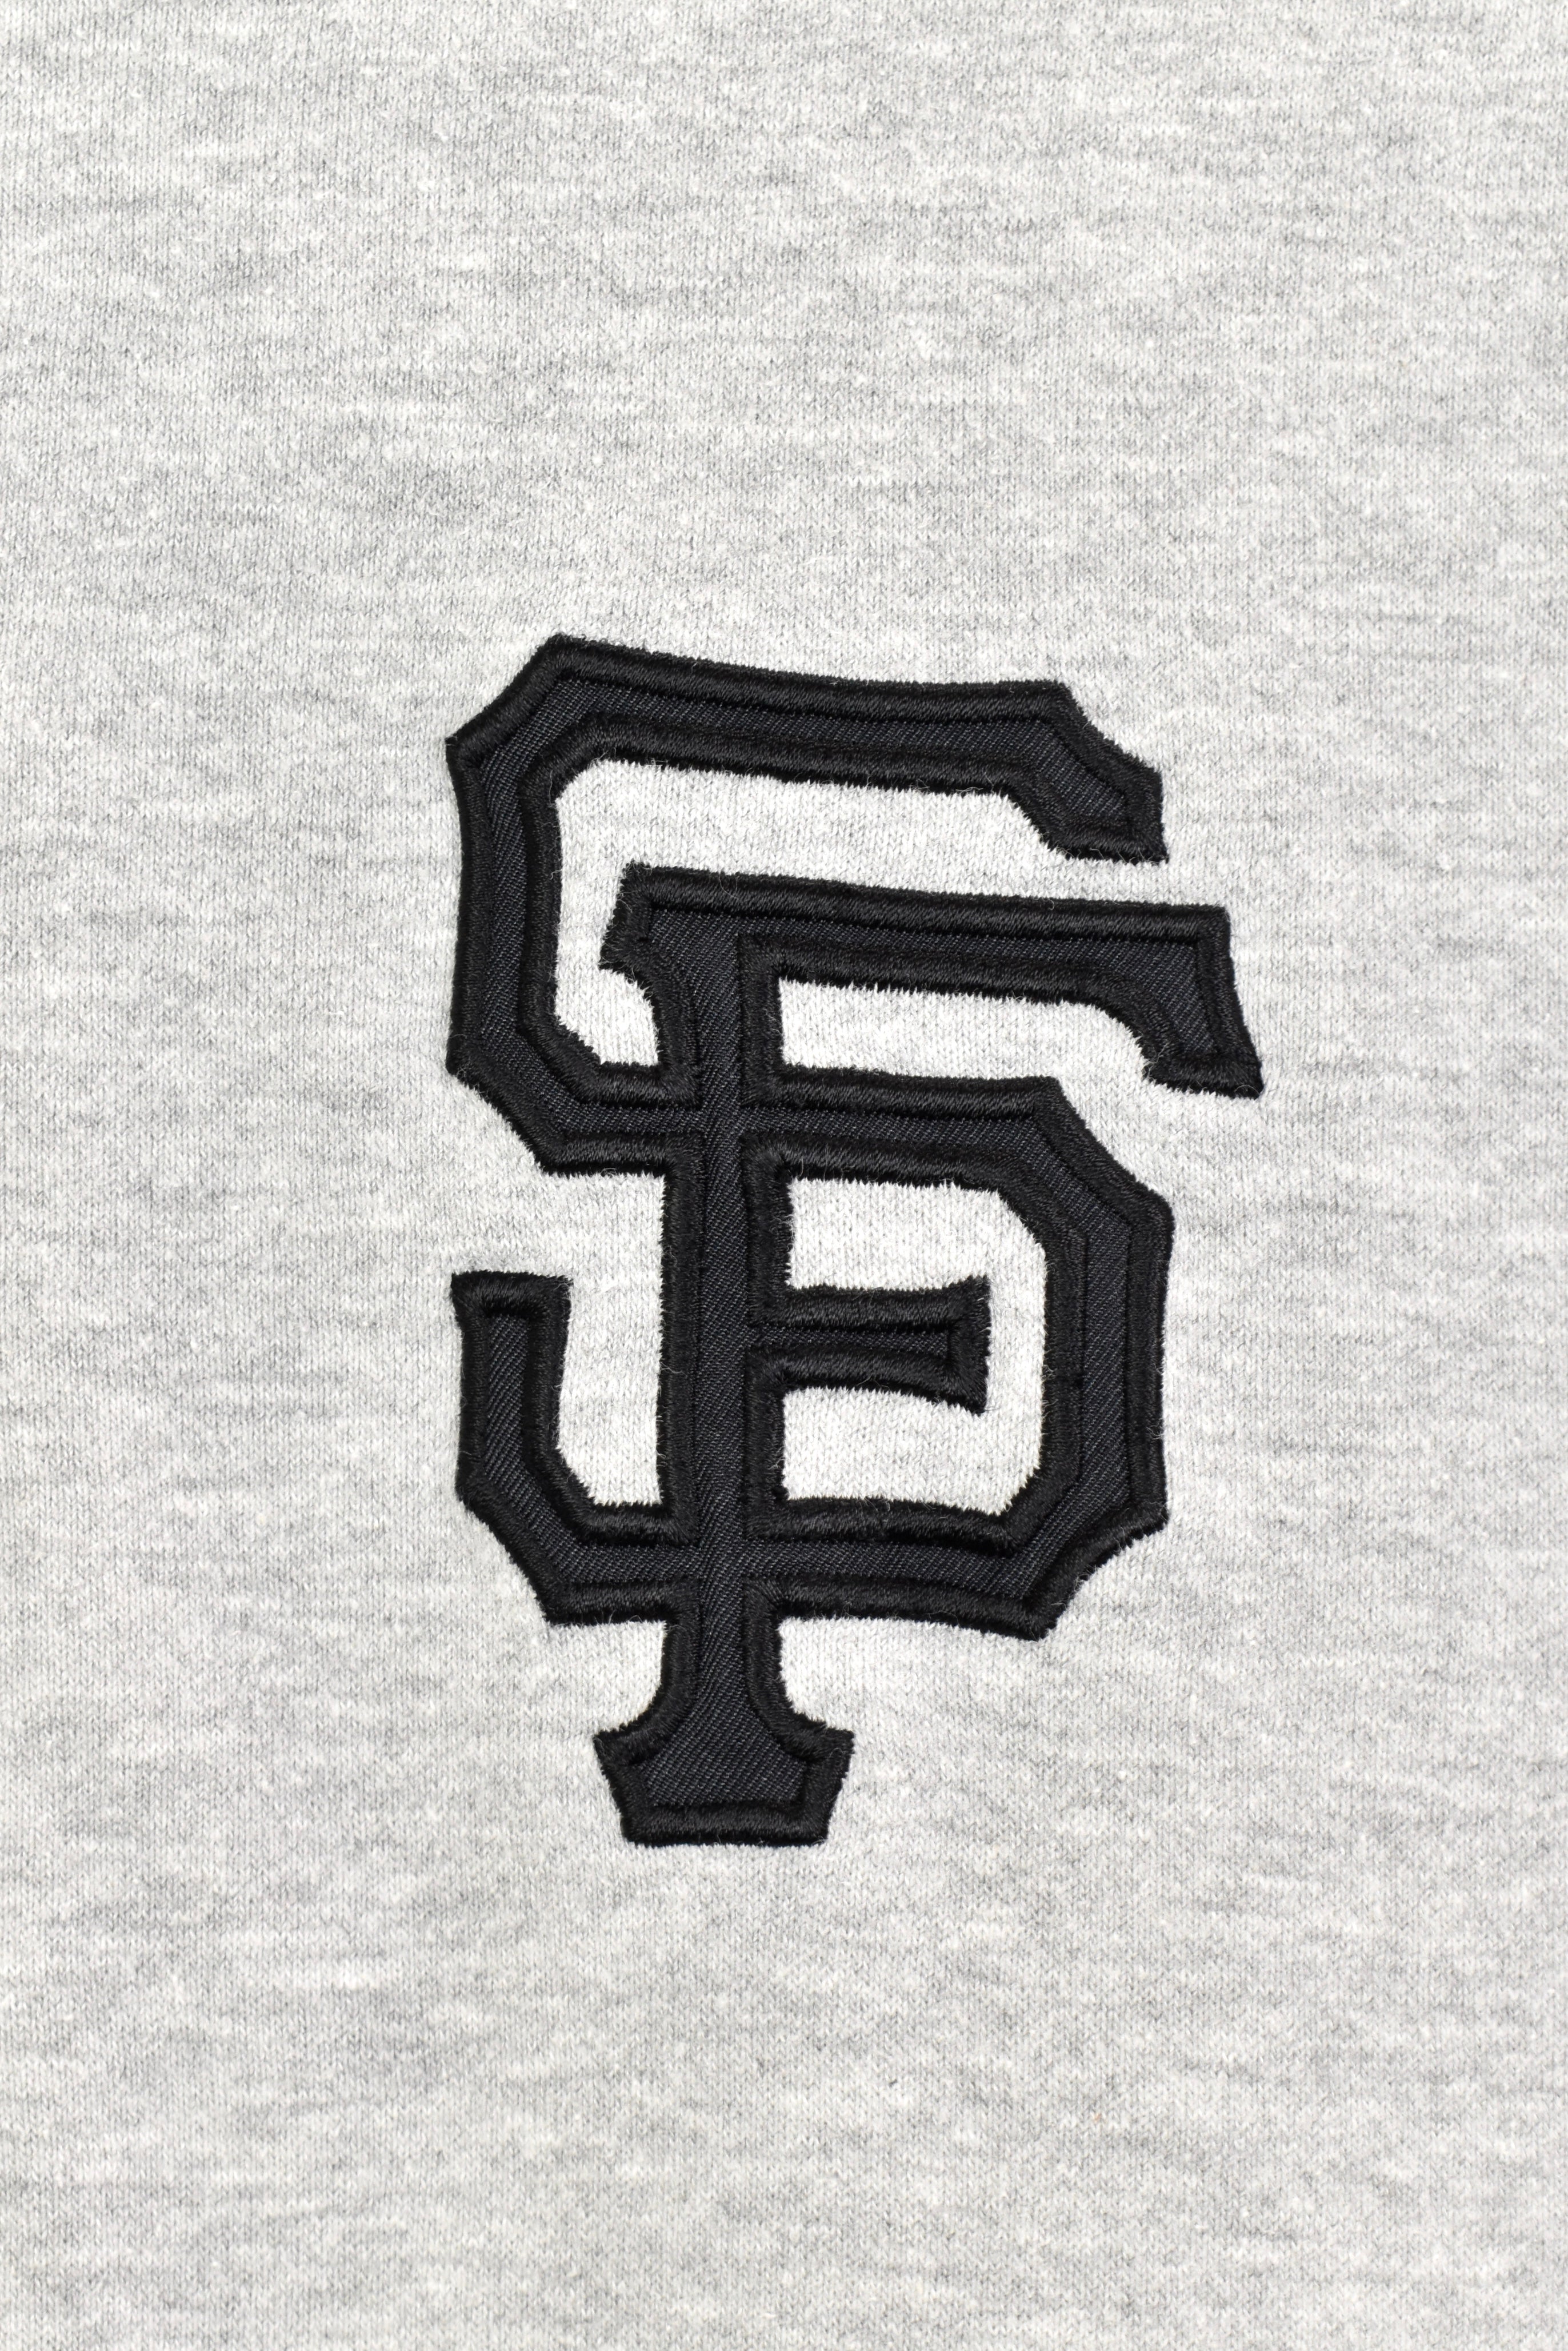 Vintage MLB San Francisco Giants embroidered grey hoodie | XL PRO SPORT